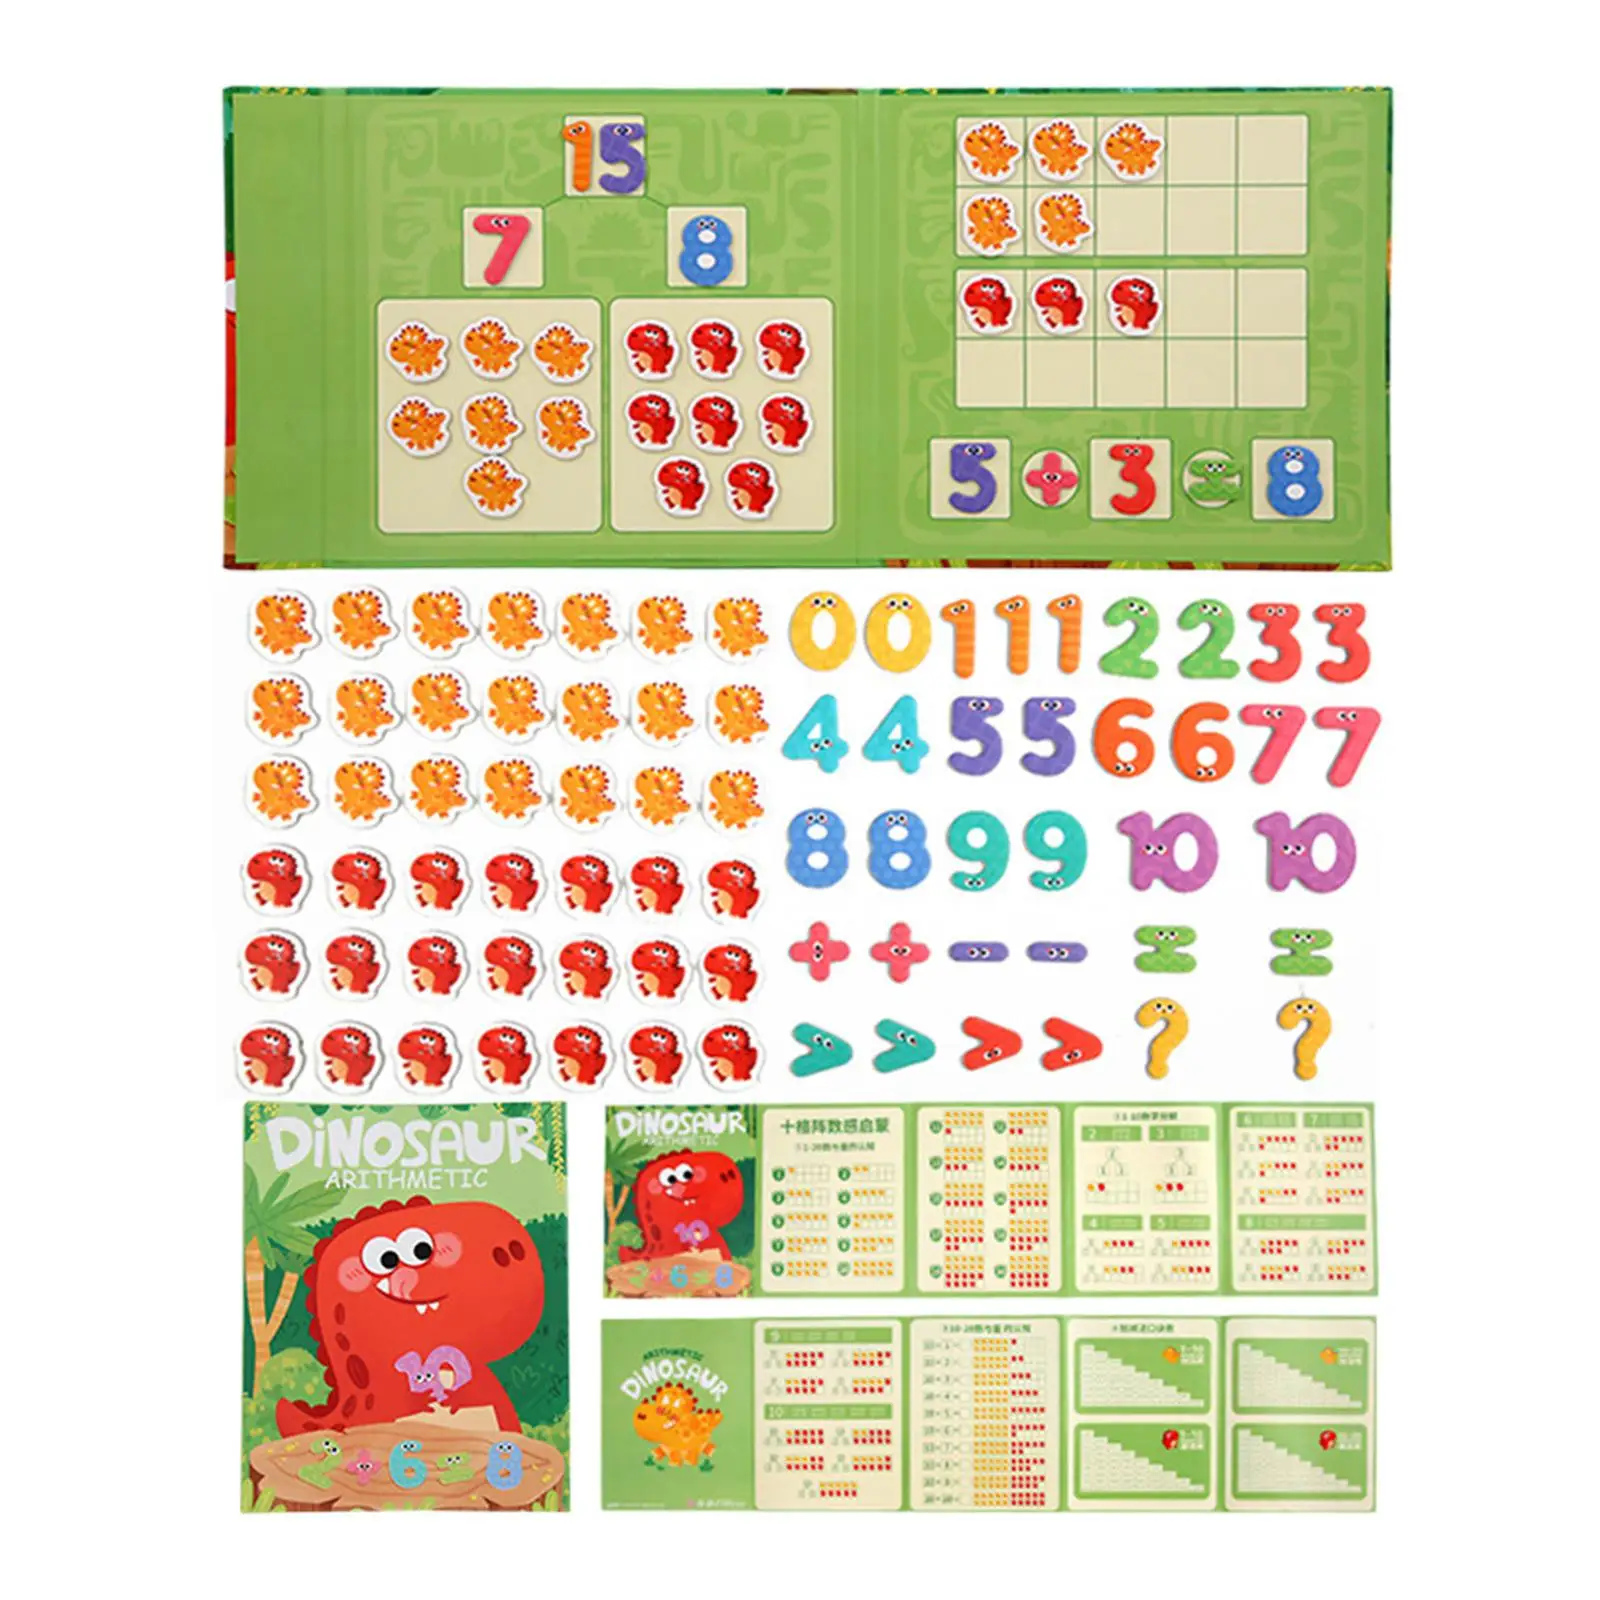 Montessori Ten Frame Set Math Games Math Teacher Aids for Home Gift Children